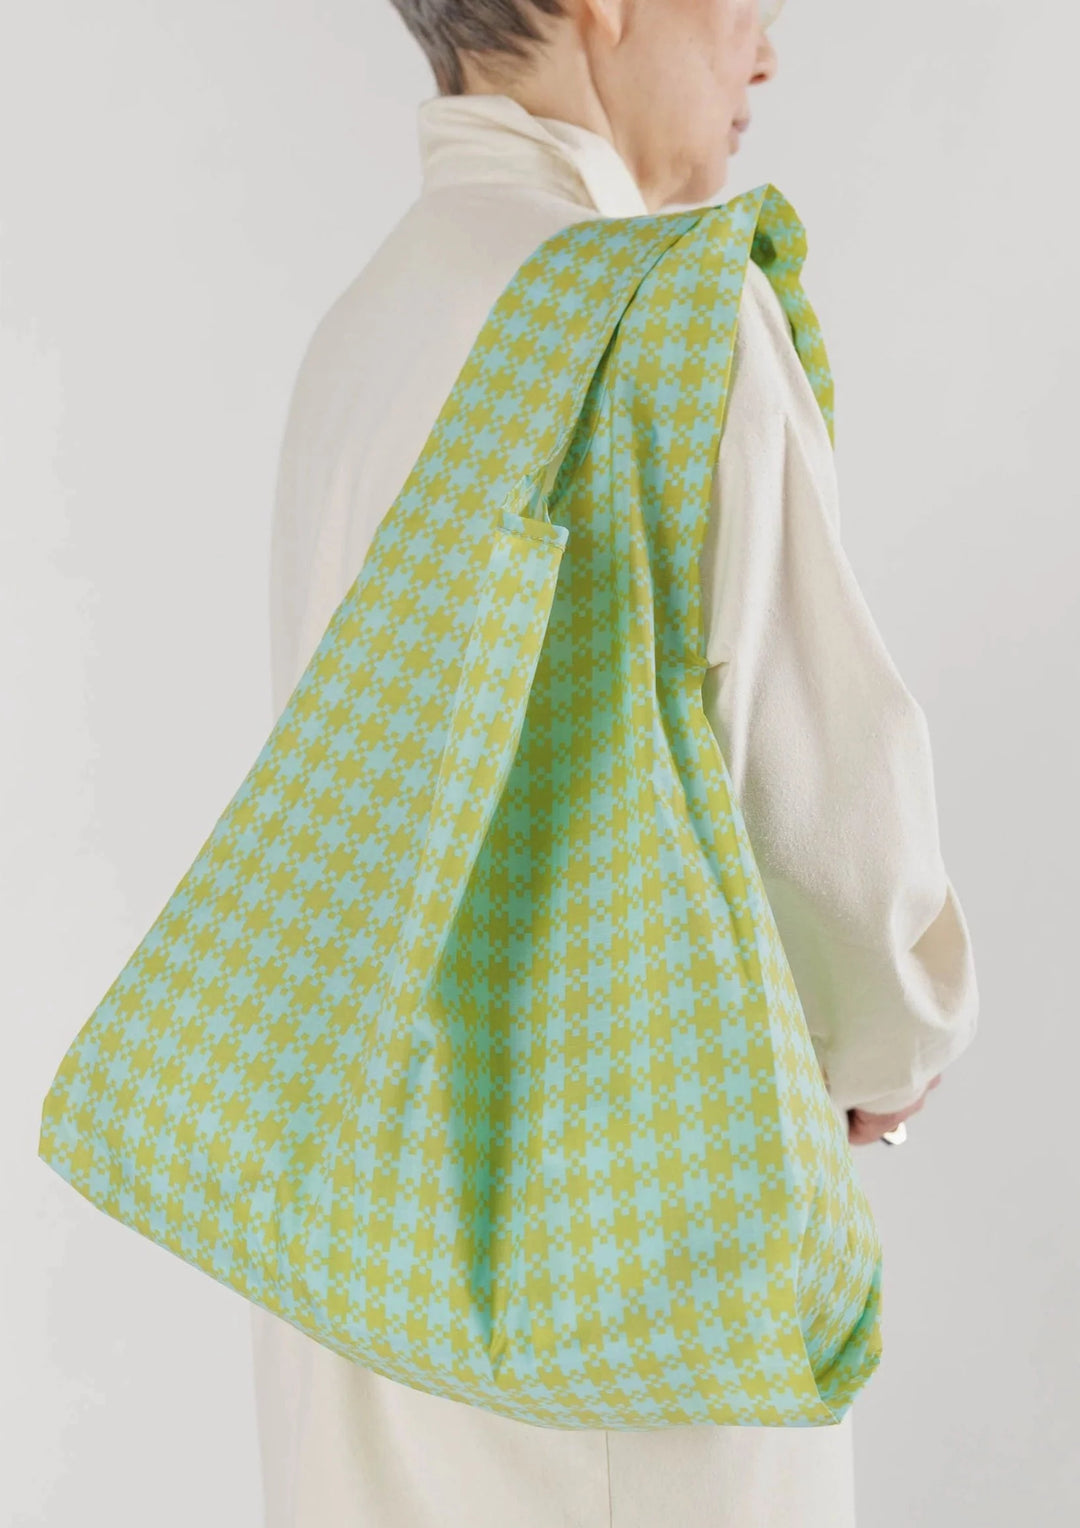 Model holding green checkered reusable bag